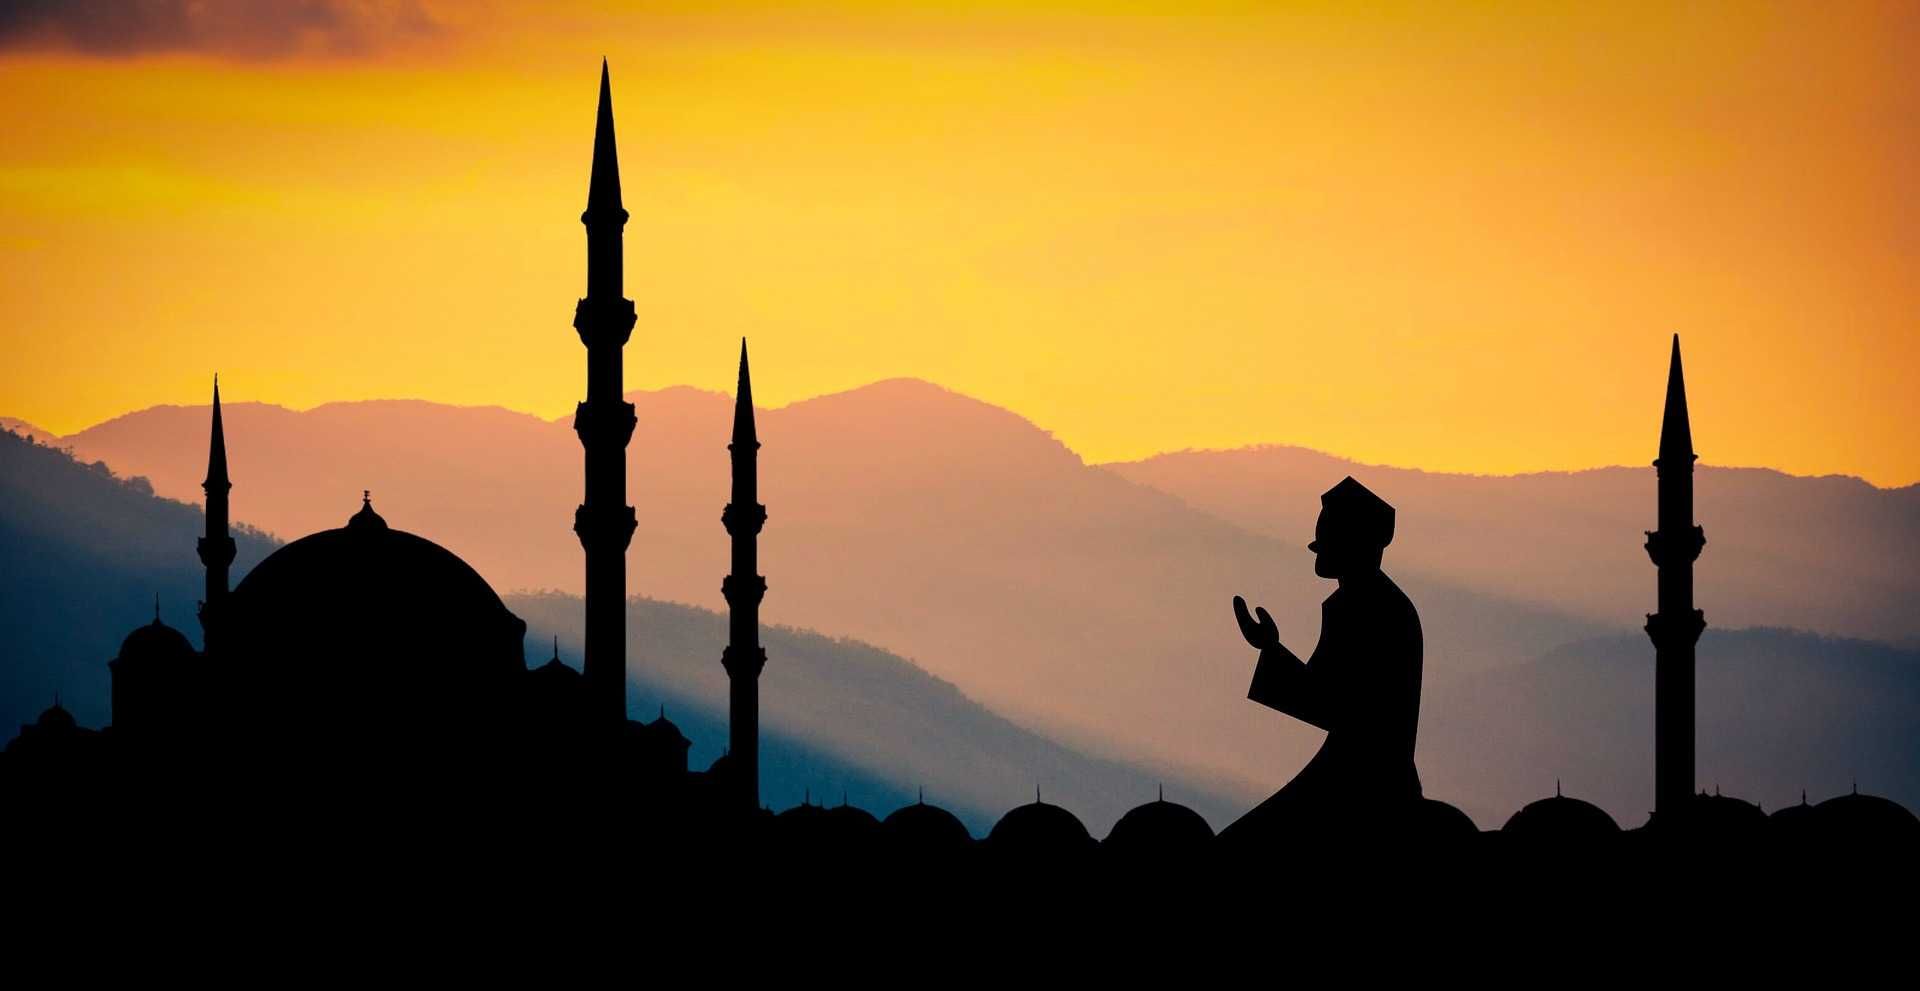 Bacaan Doa Berbuka Puasa Ramadhan Lengkap Beserta Arab, Latin, dan Terjemahan Bahasa Indonesia 